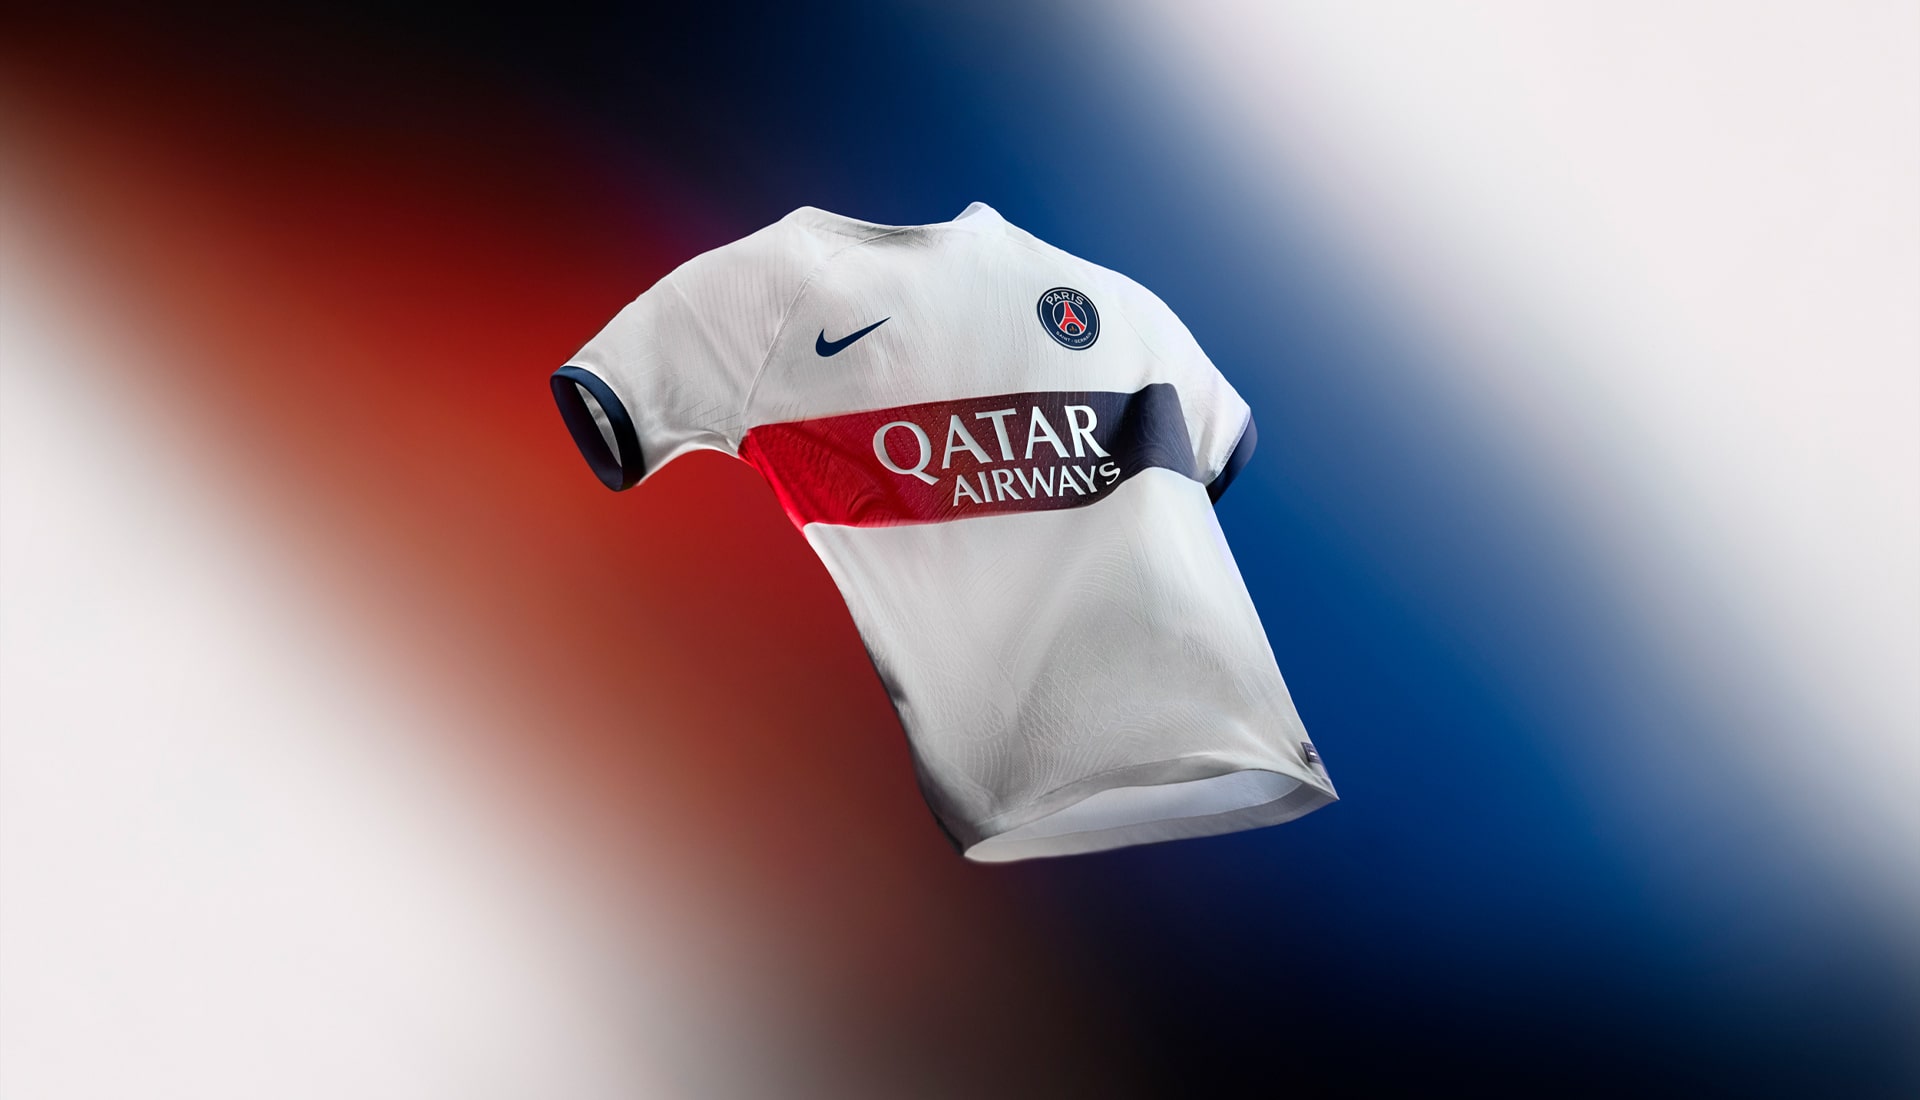 Nike Launch Tottenham Hotspur 21/22 Away Shirt - SoccerBible